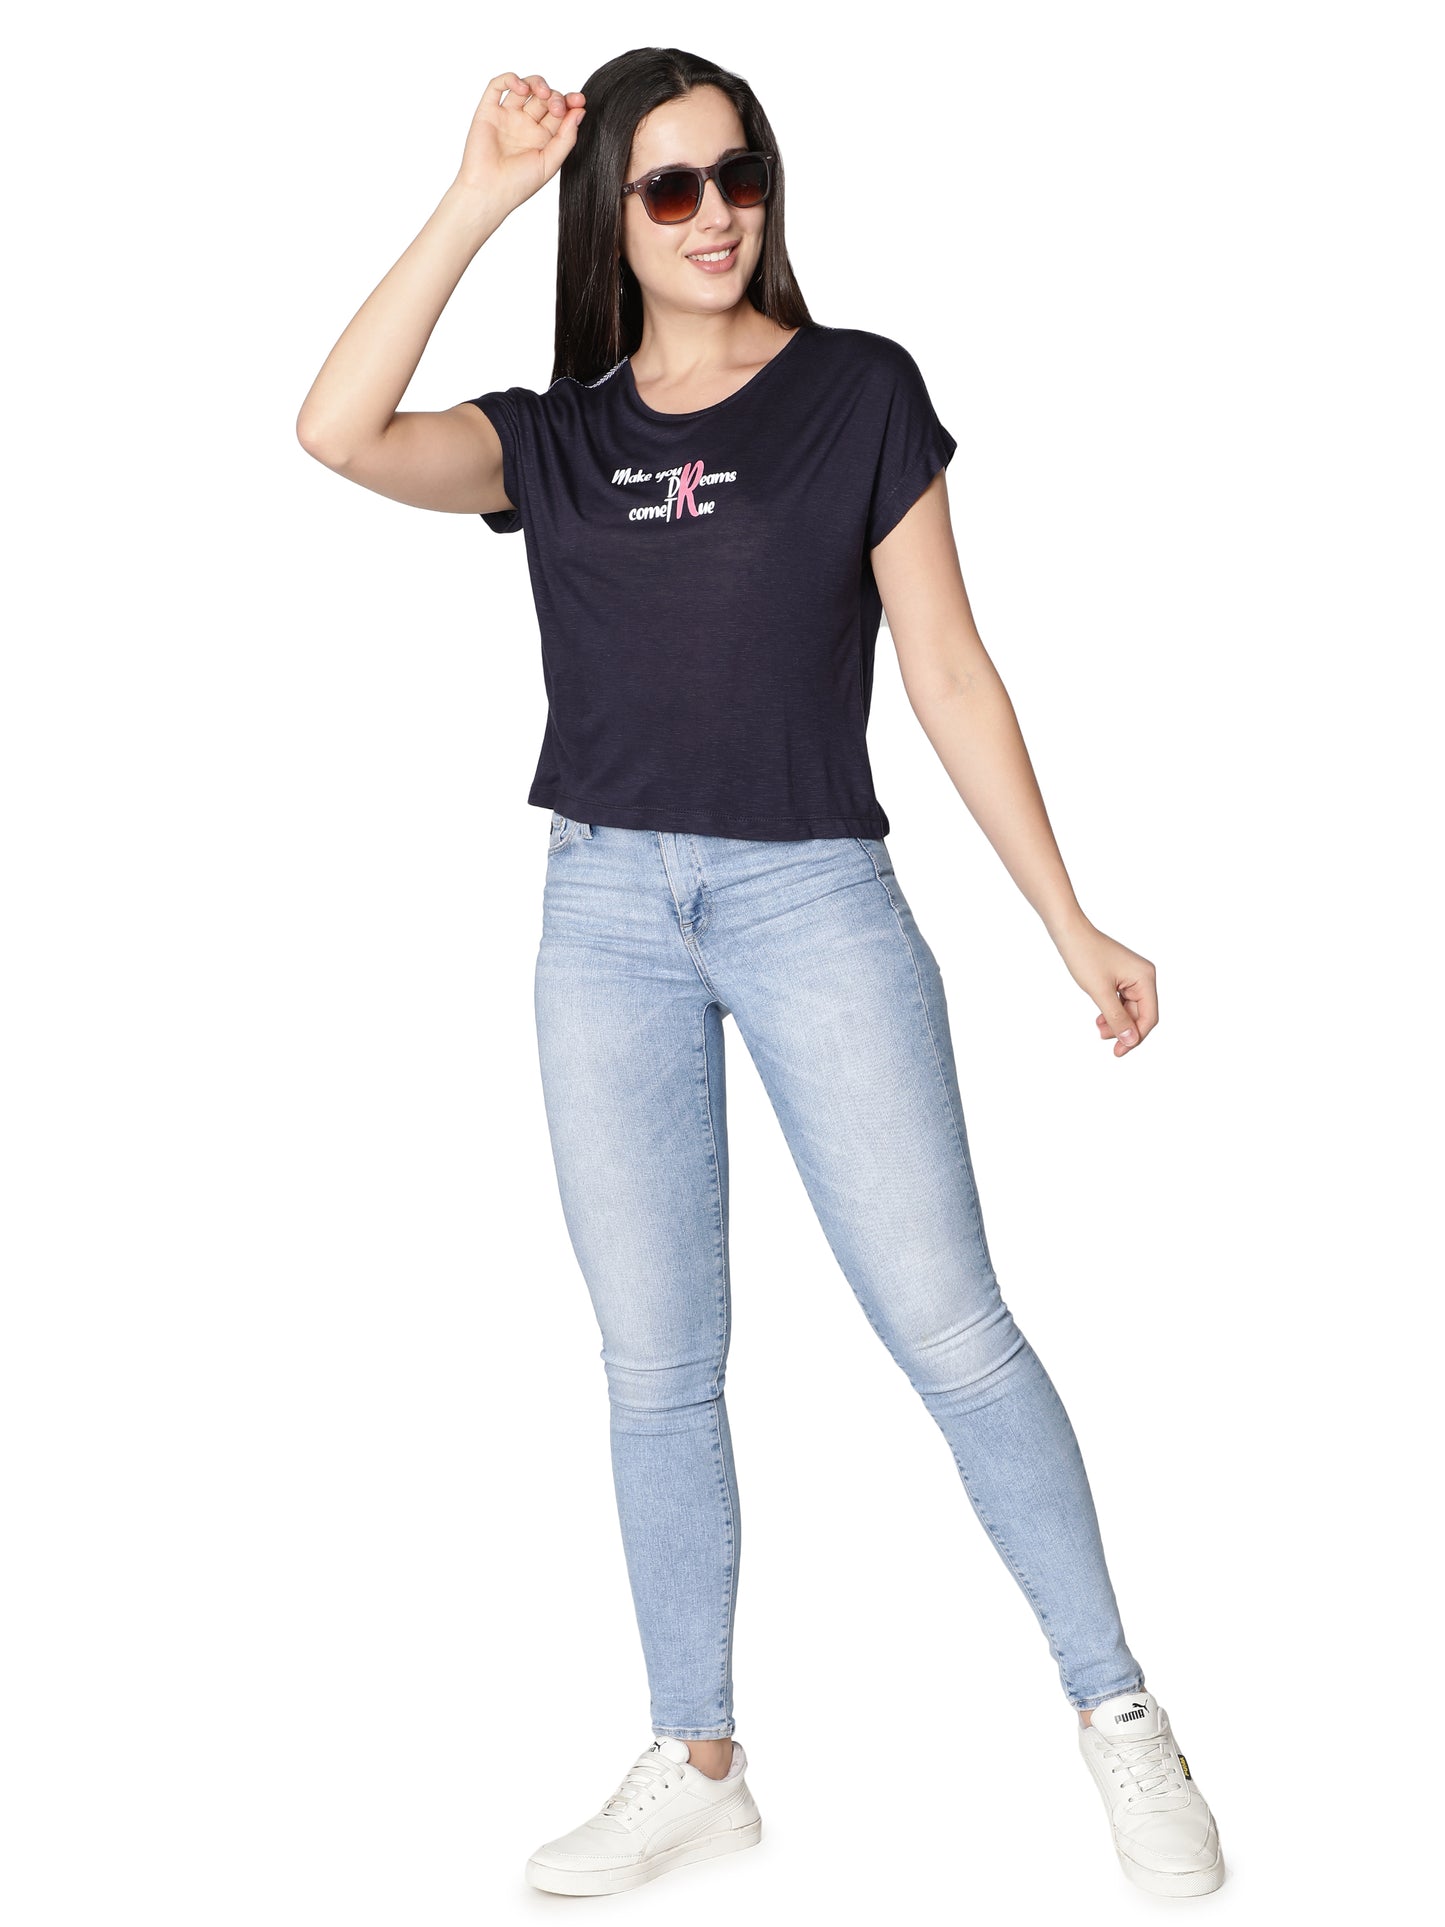 NUEVOSDAMAS Women Rayon Graphic Printed Blue T-Shirt